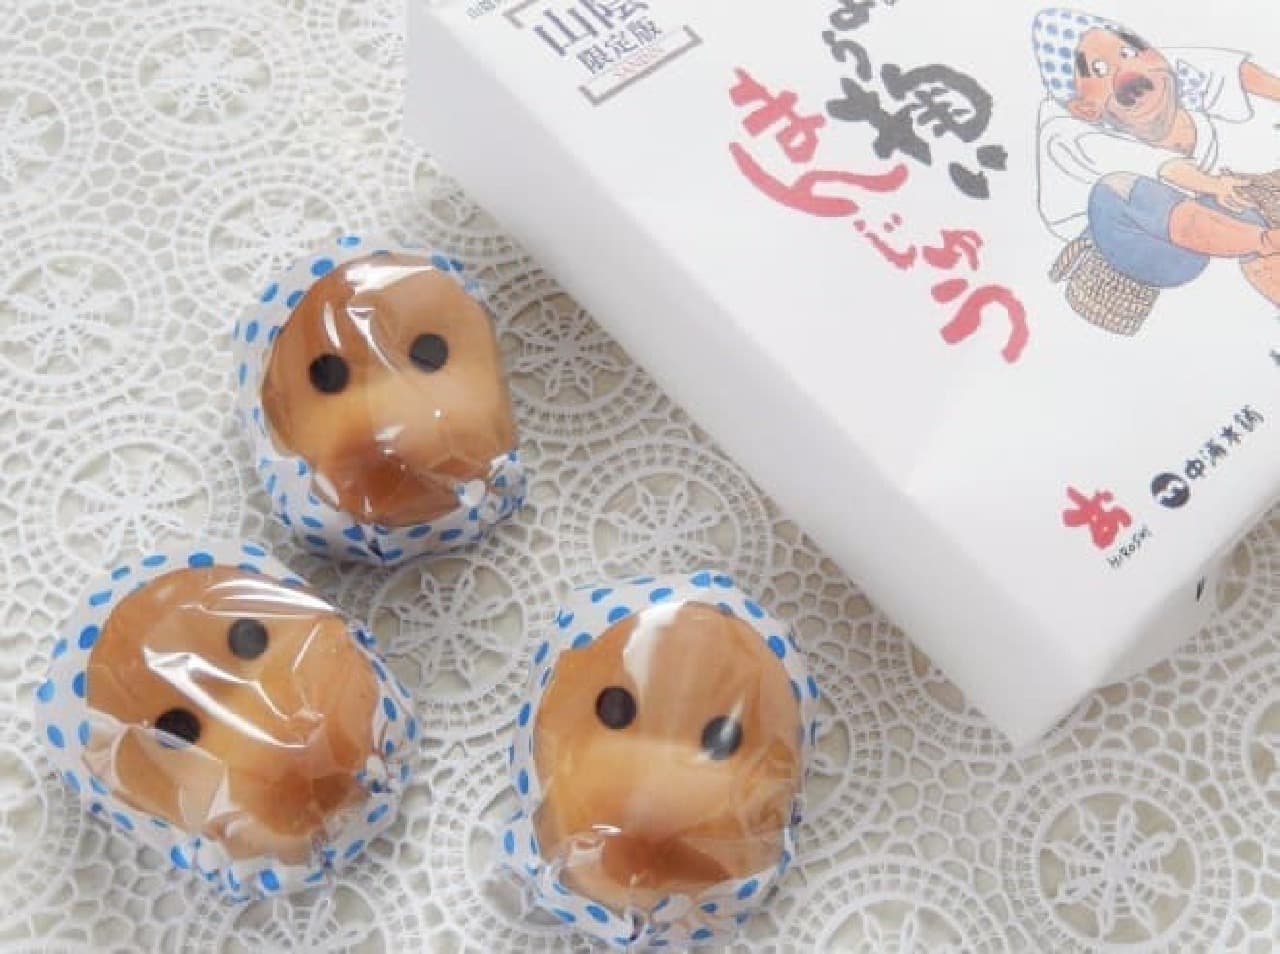 San'in famous confectionery "Dojosukui manju